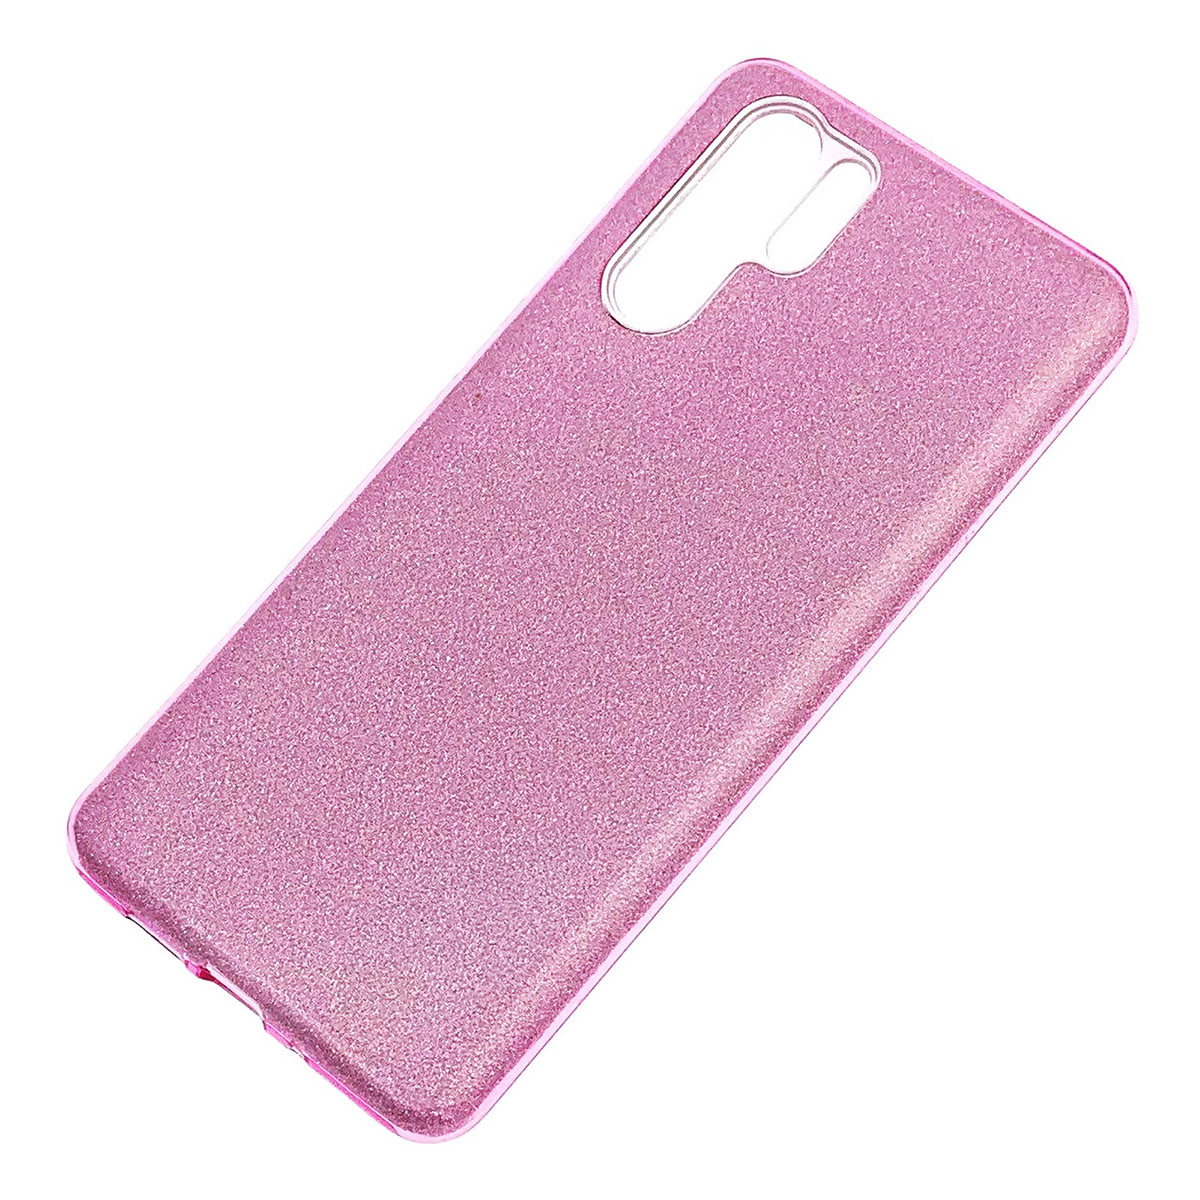 Чехол накладка Shine для HUAWEI P30 Pro (VOG-L29), силикон, блестки, цвет розовый.